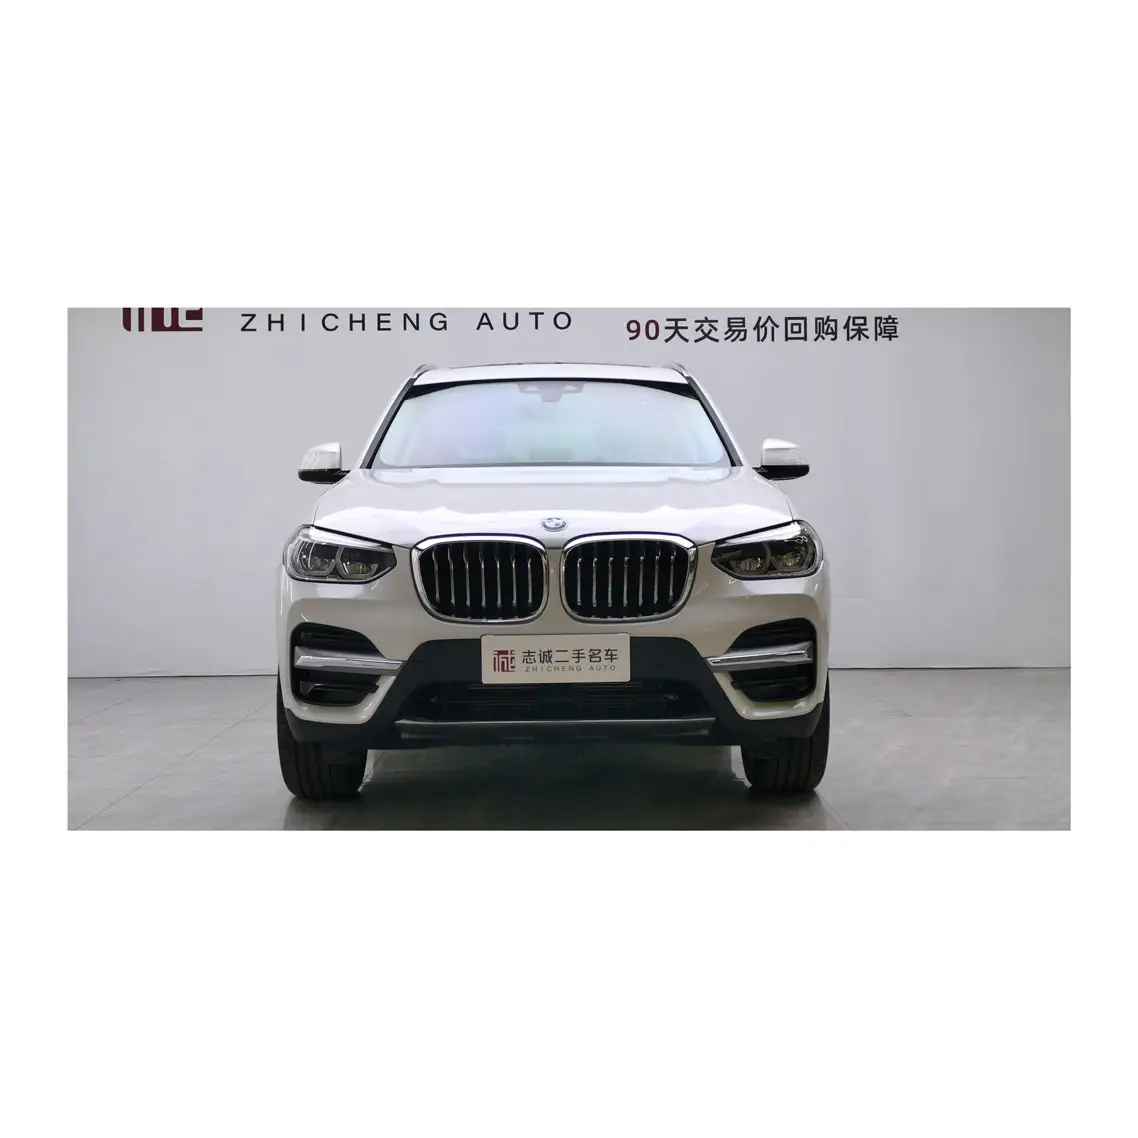 BMW X3 SUV coche de segunda mano Lujoso Suv Bmw X3 2021 Coches usados Venta caliente Sport AWD Automático (depósito)